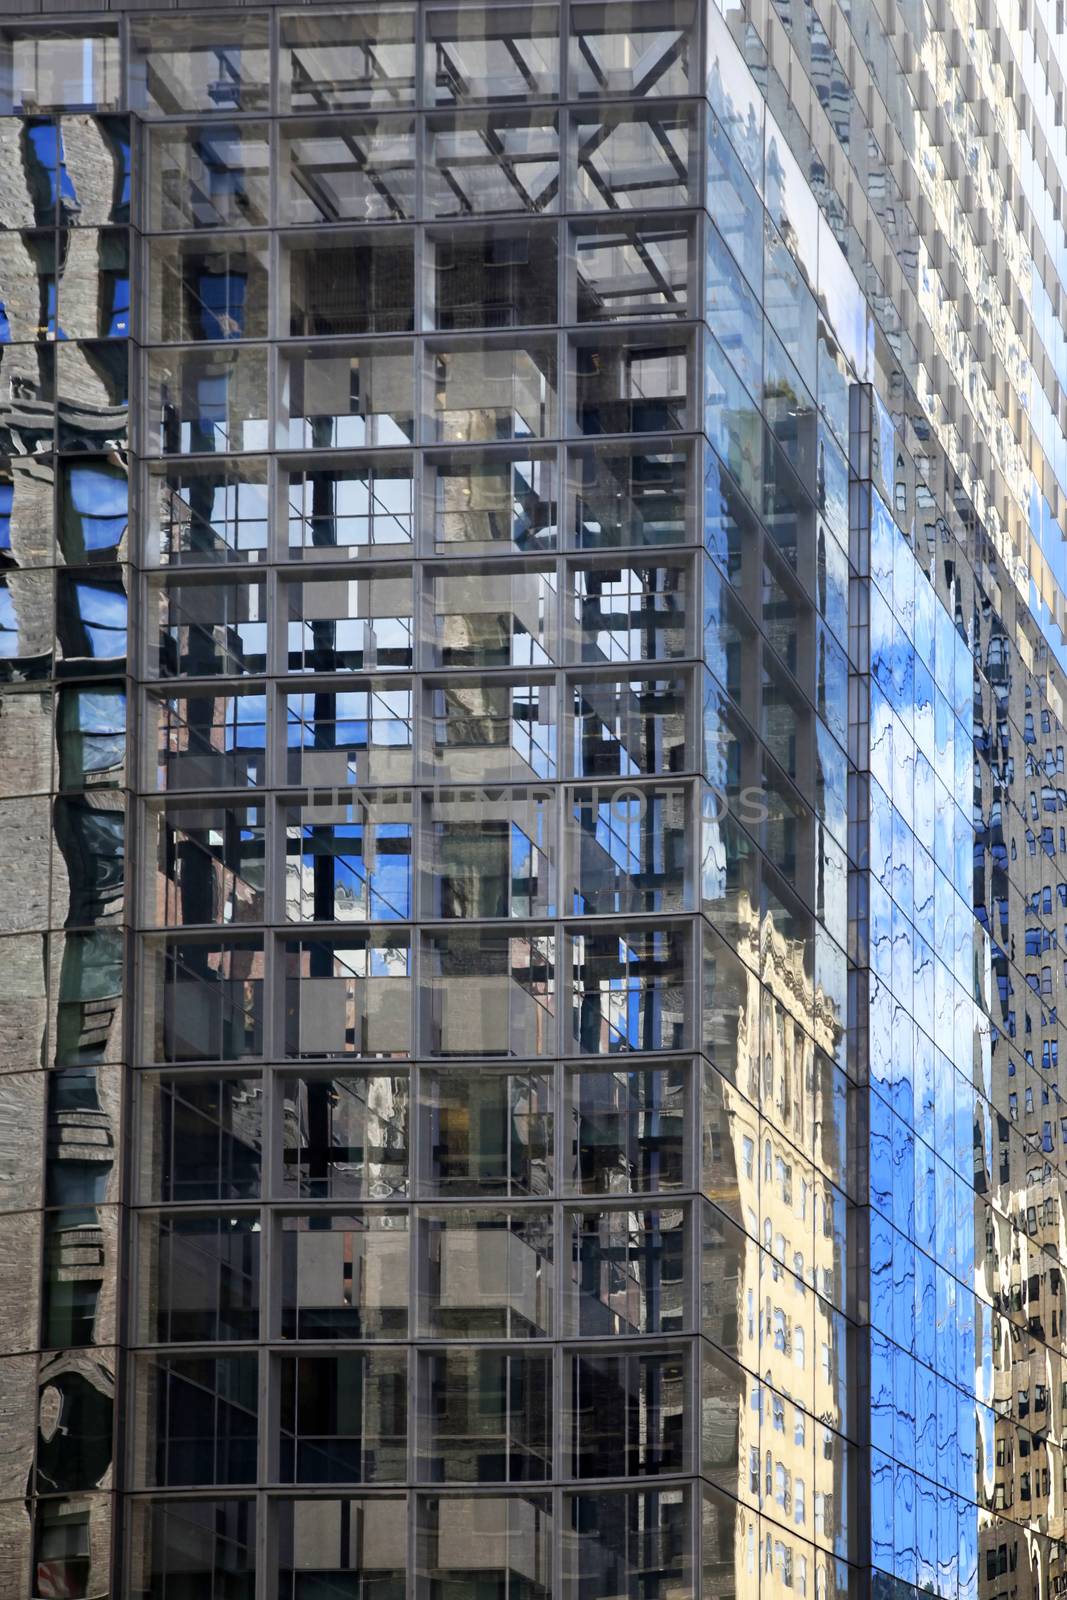 High buildings in New York. Manhattan